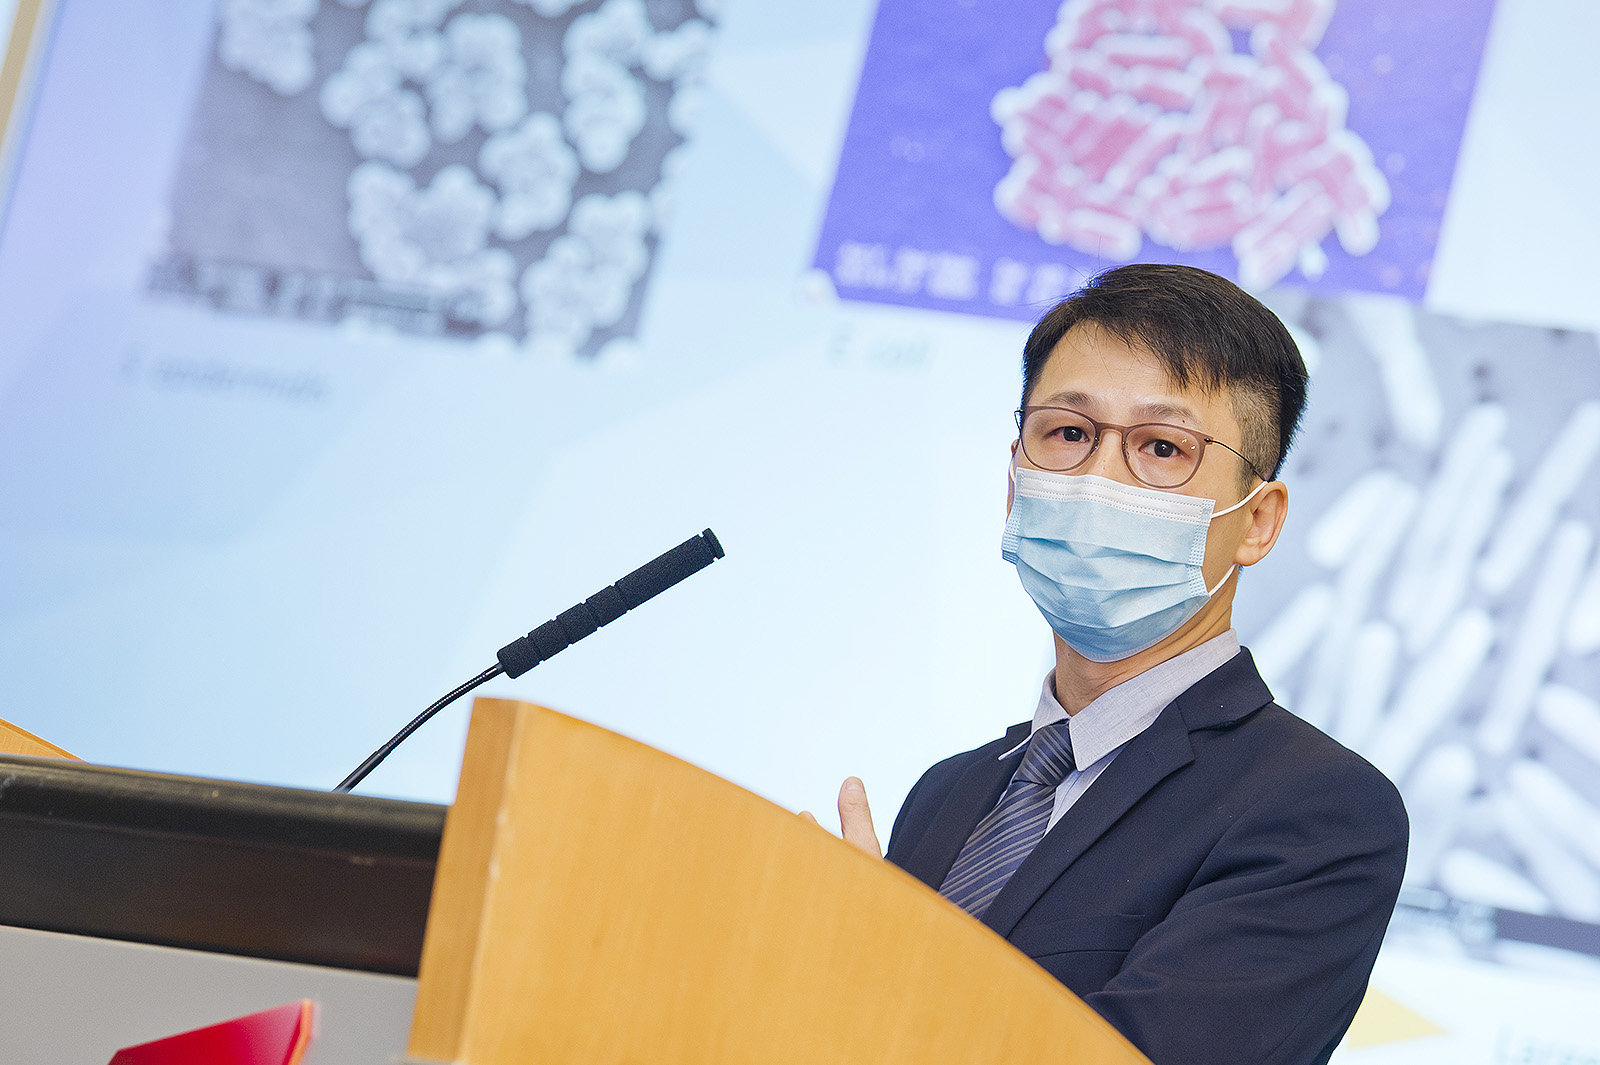 Professor Lai introduces studies on the transmission of pathogens through airborne aerosol droplets.